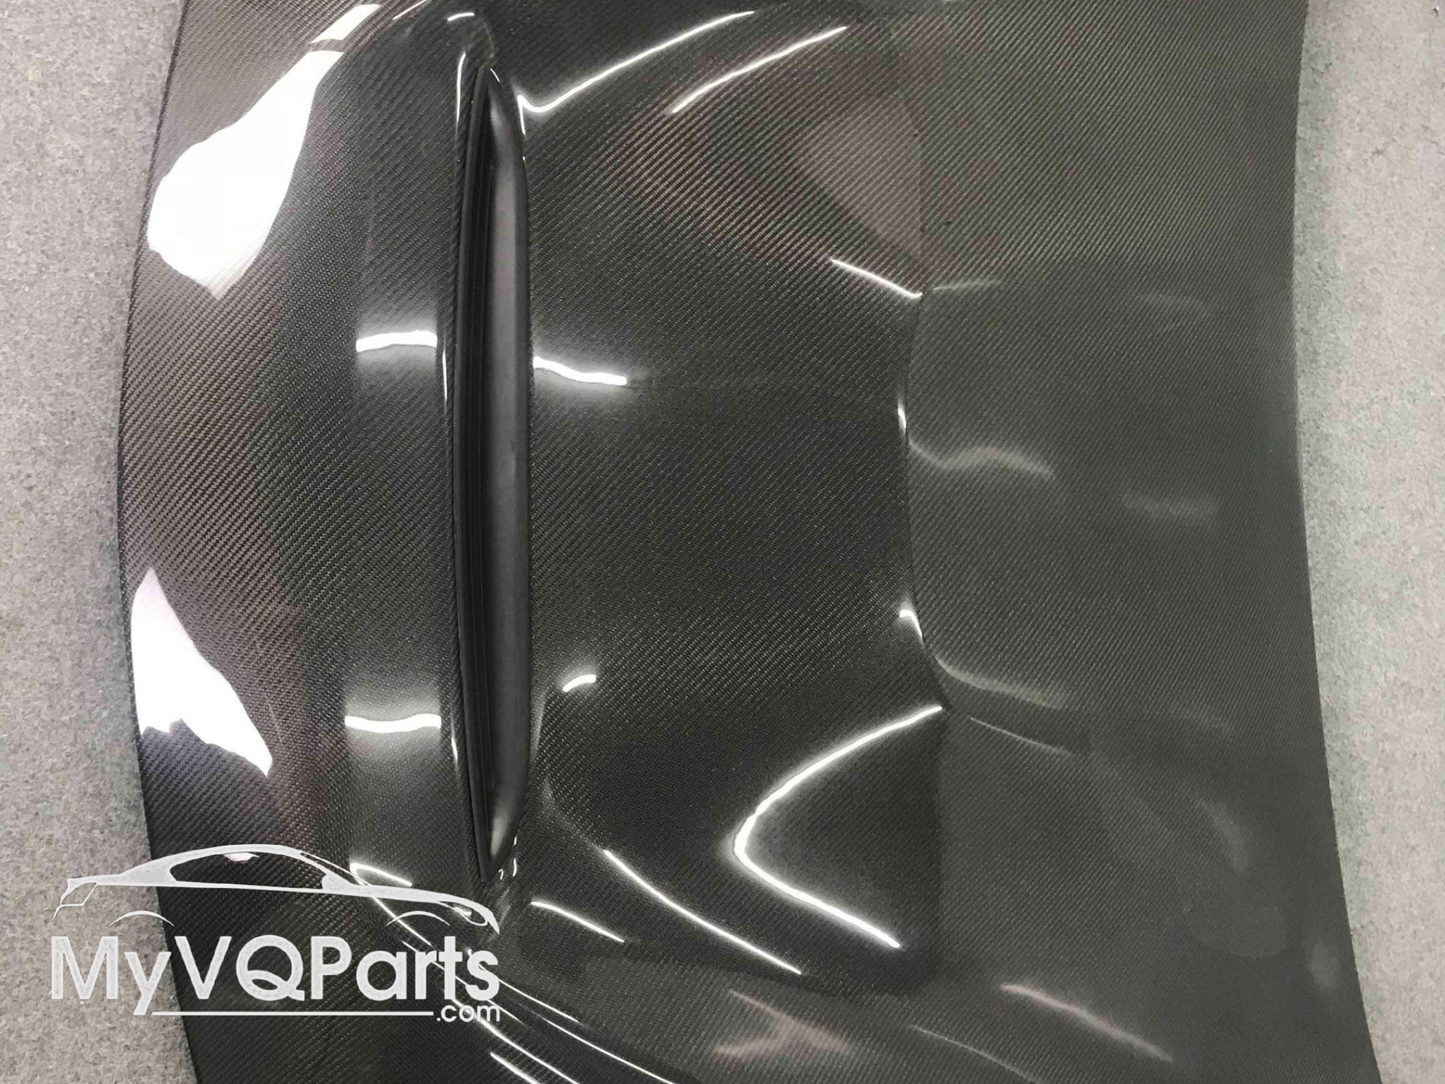 MyVQParts G37 Sedan Full Carbon Fiber Vented GTS Style Hood